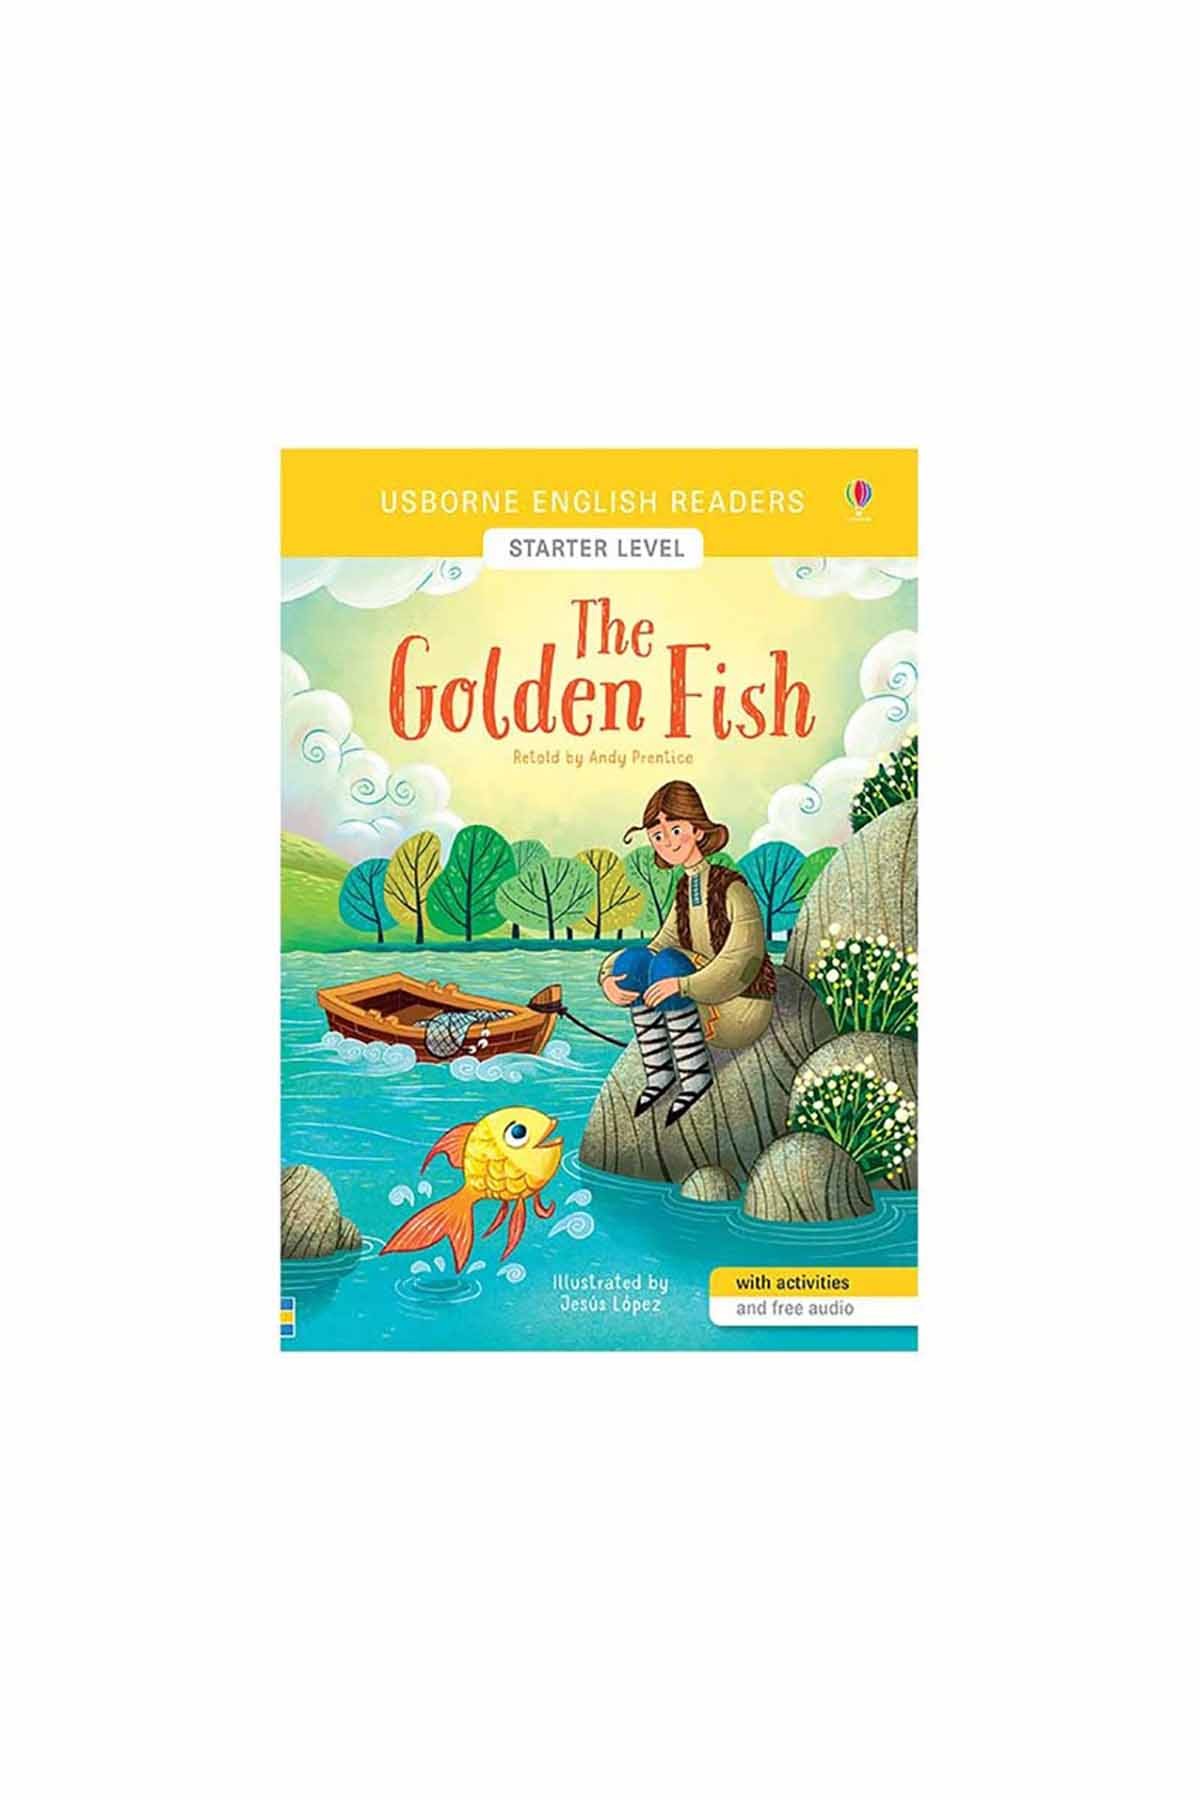 The Usborne The Golden Fish - English Readers Starter Level